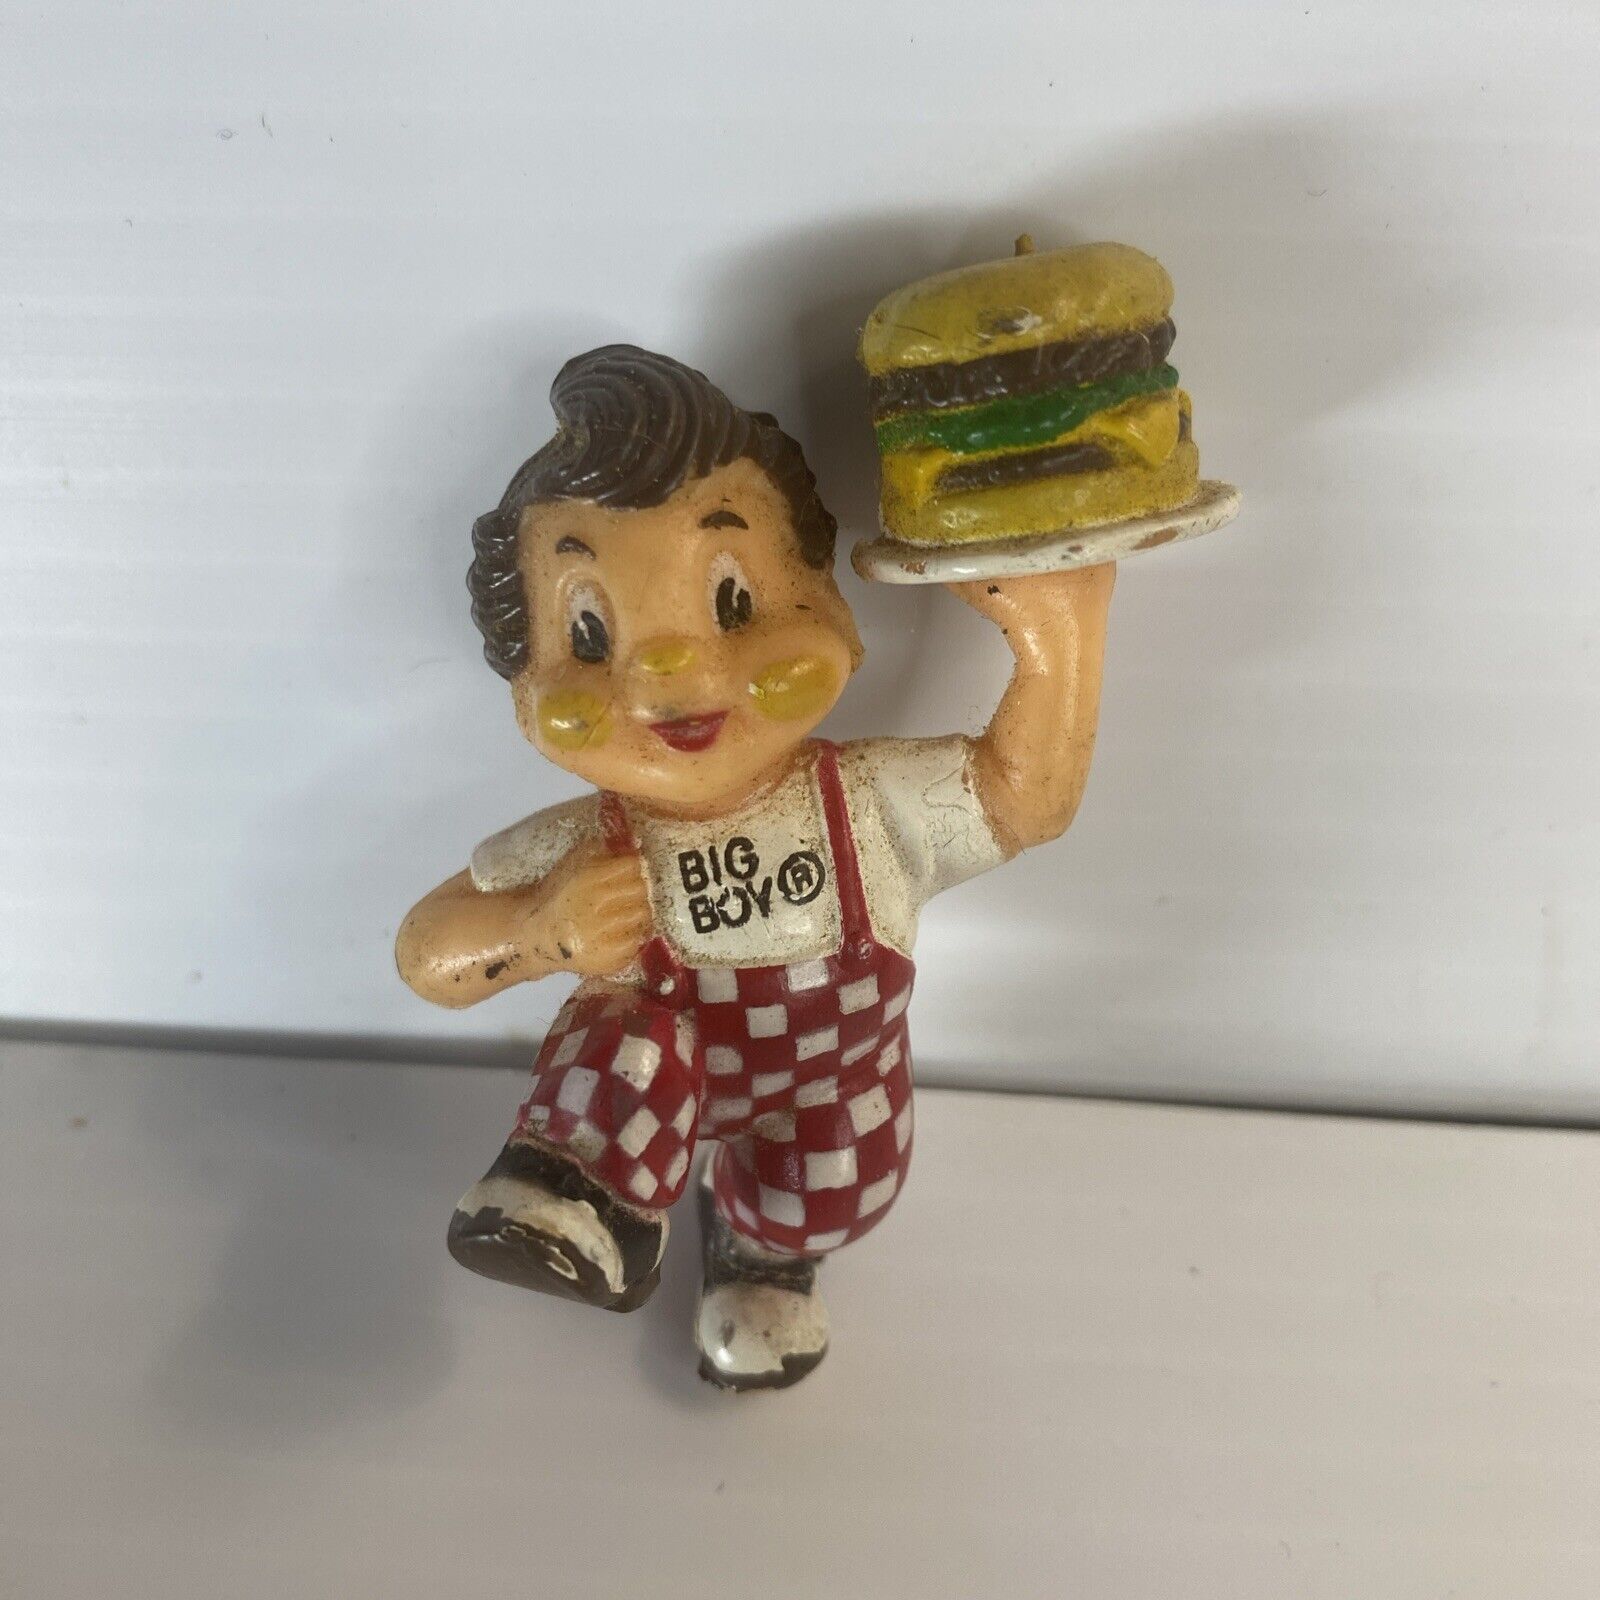 Vintage Bob's Big Boy Character action figure